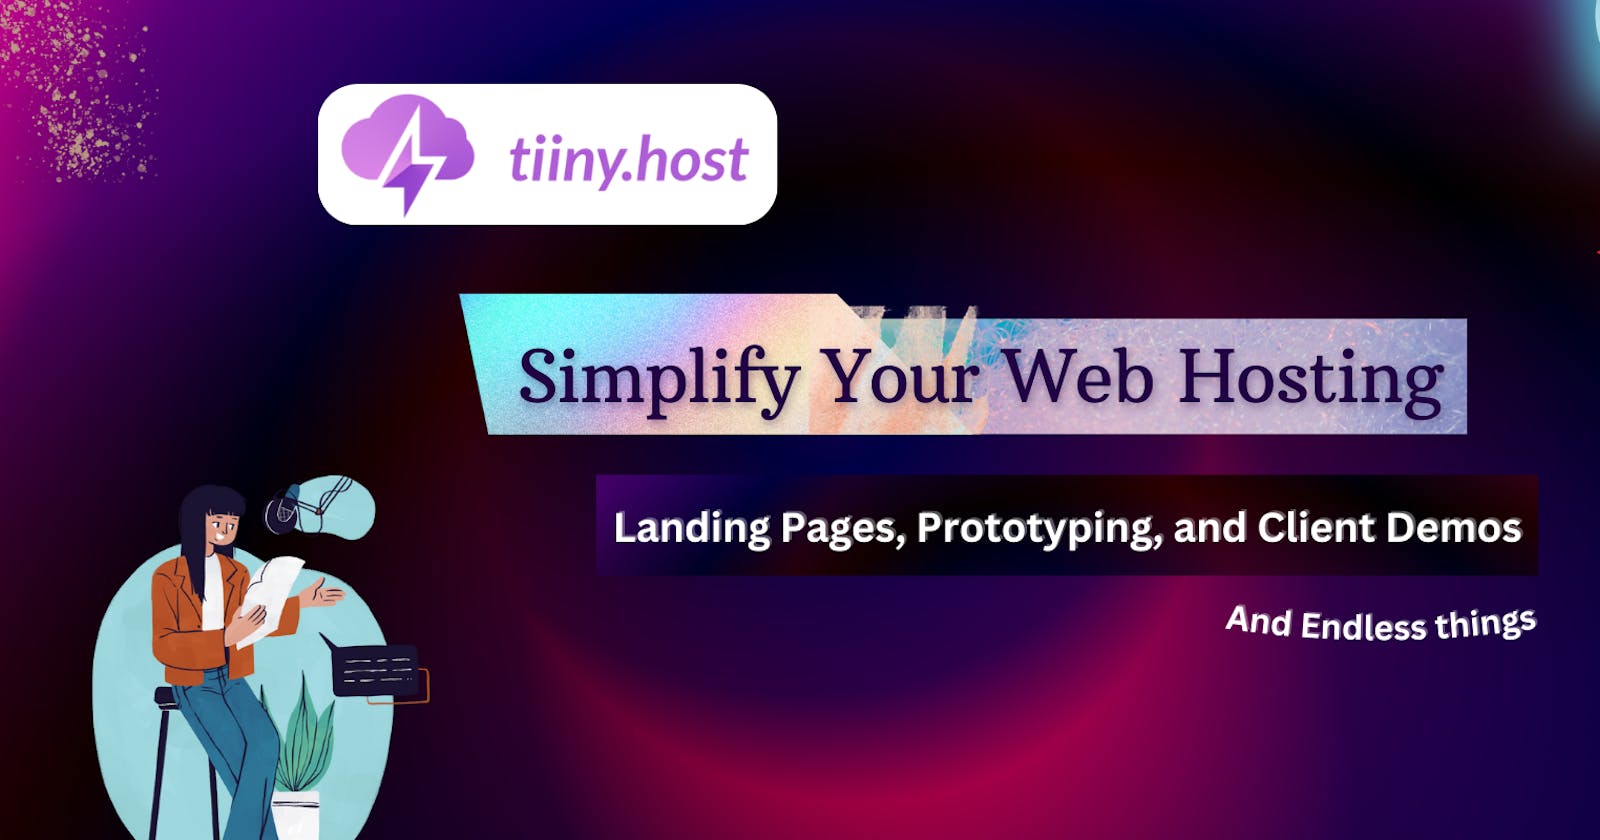 TiinyHost - Host Your Website Effortlessly